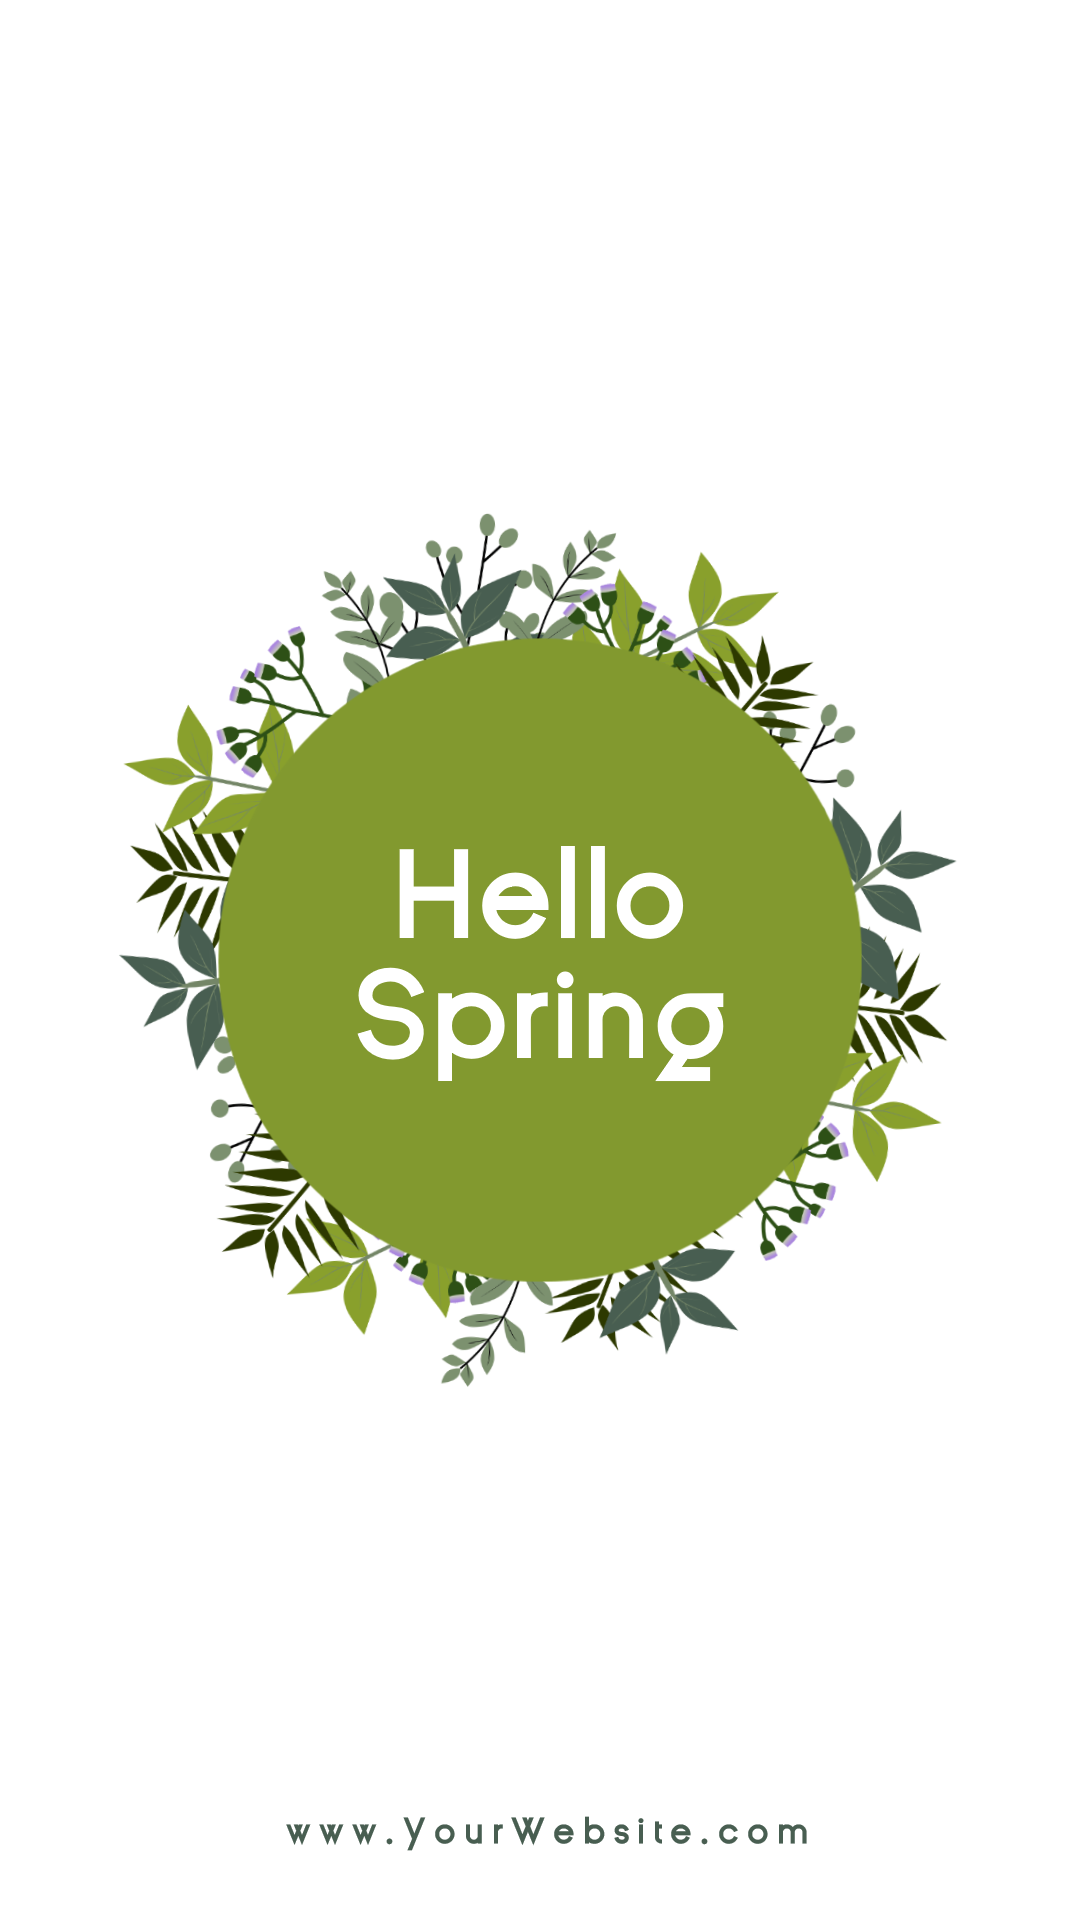 Hello spring social media post - Animation  Template 